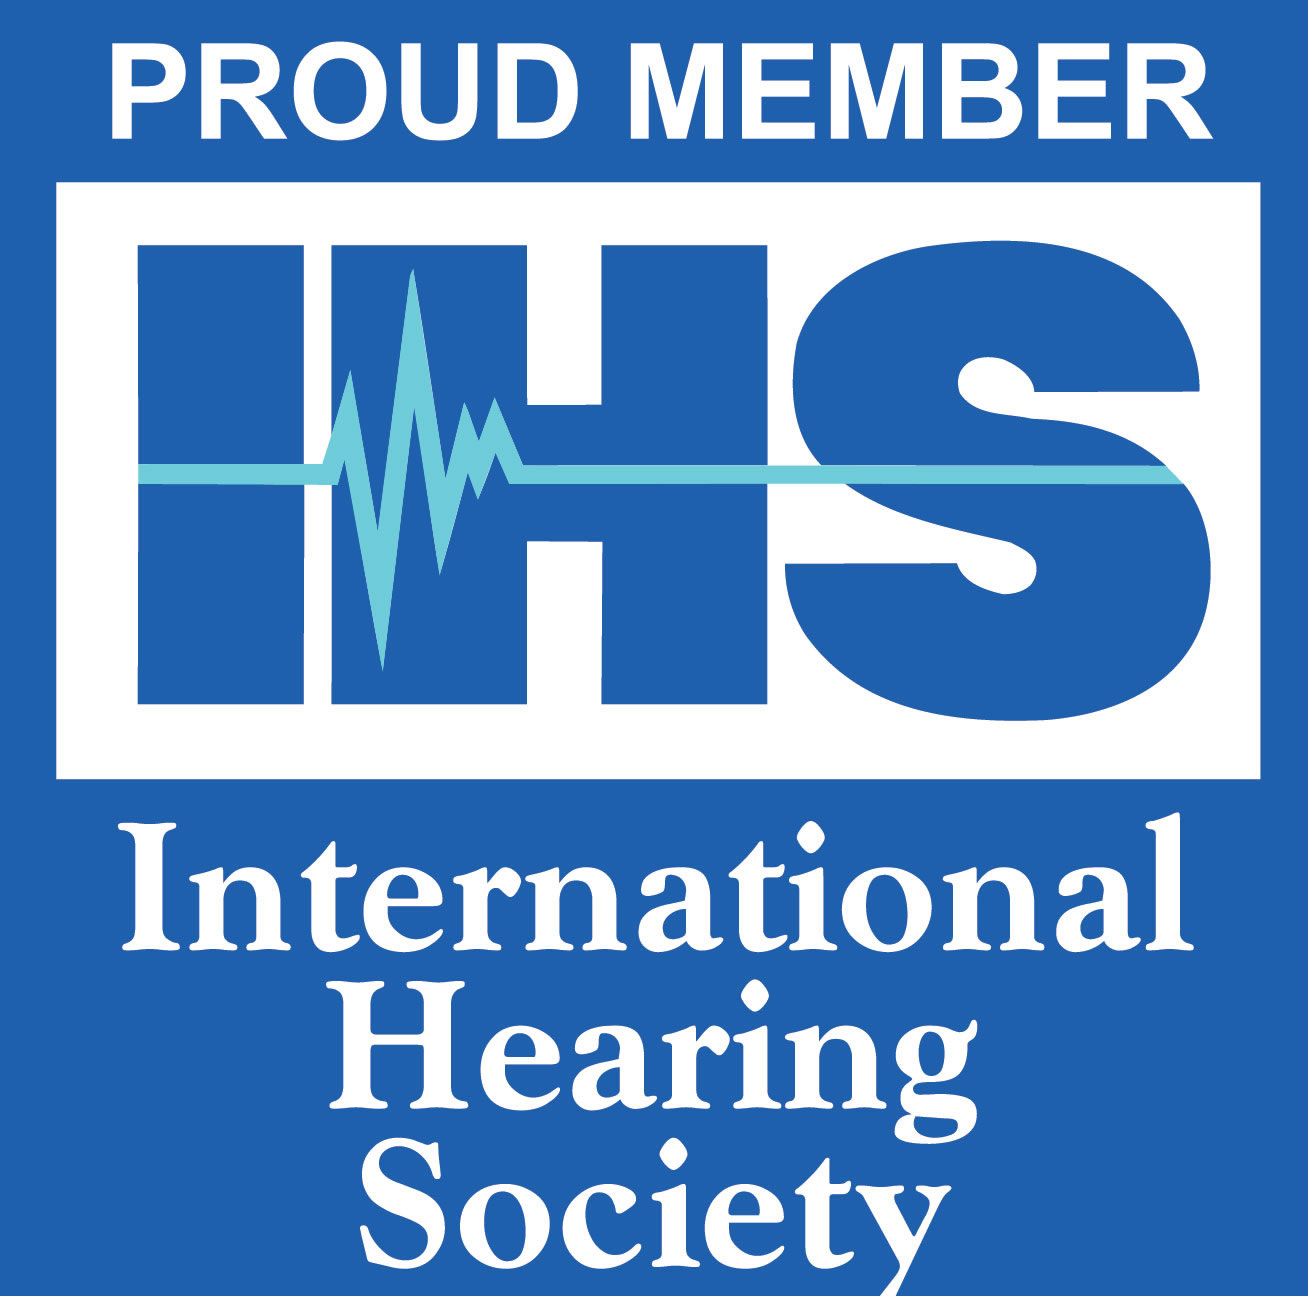 International Hearing Society